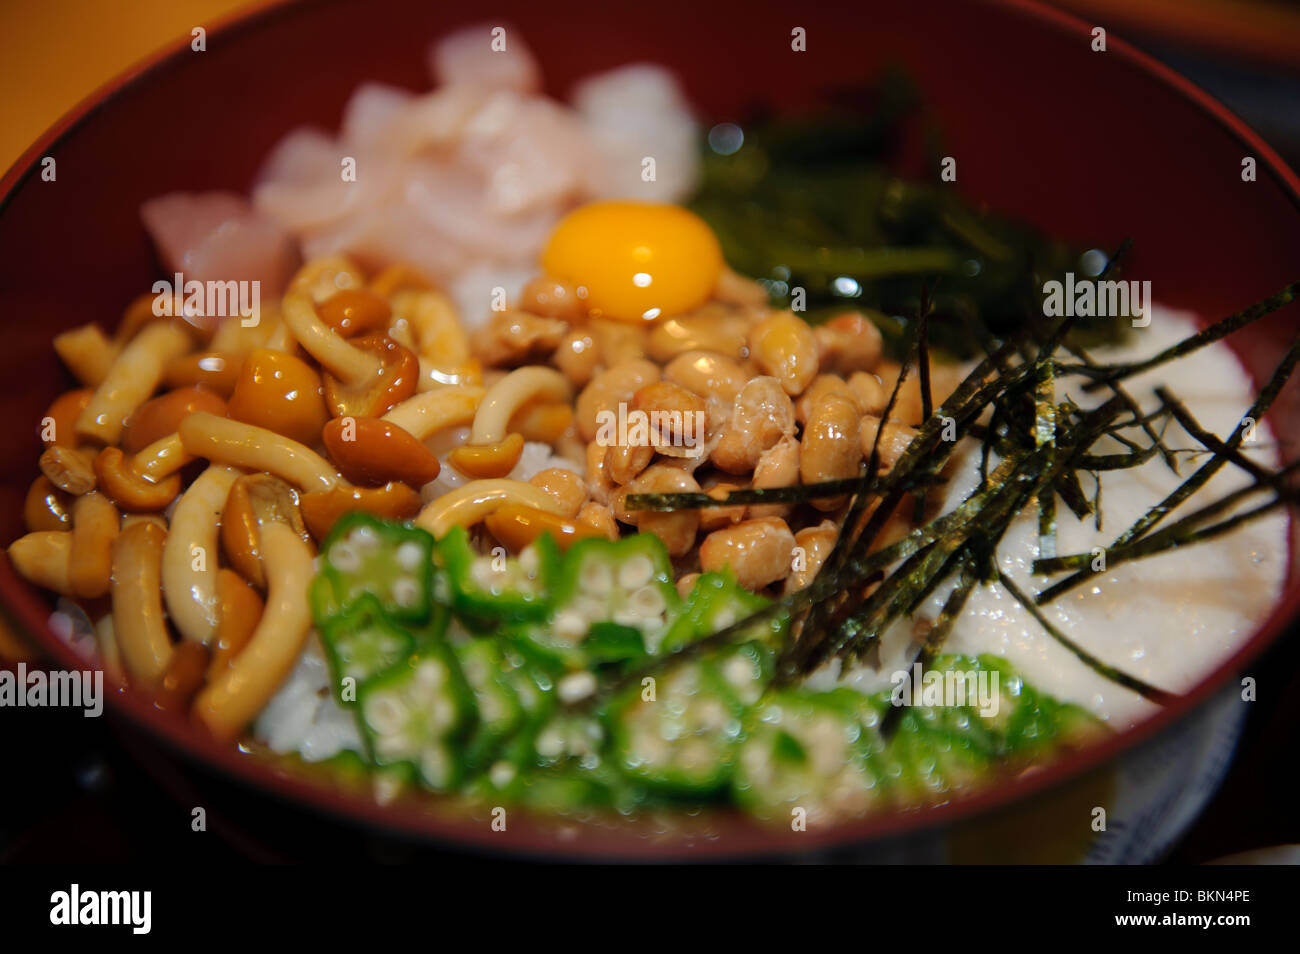 A dish containing natto and various slimy ingredients, Natto restaurant, Mito, Ibaraki Pref, Japan, April 17, 2010. Stock Photo